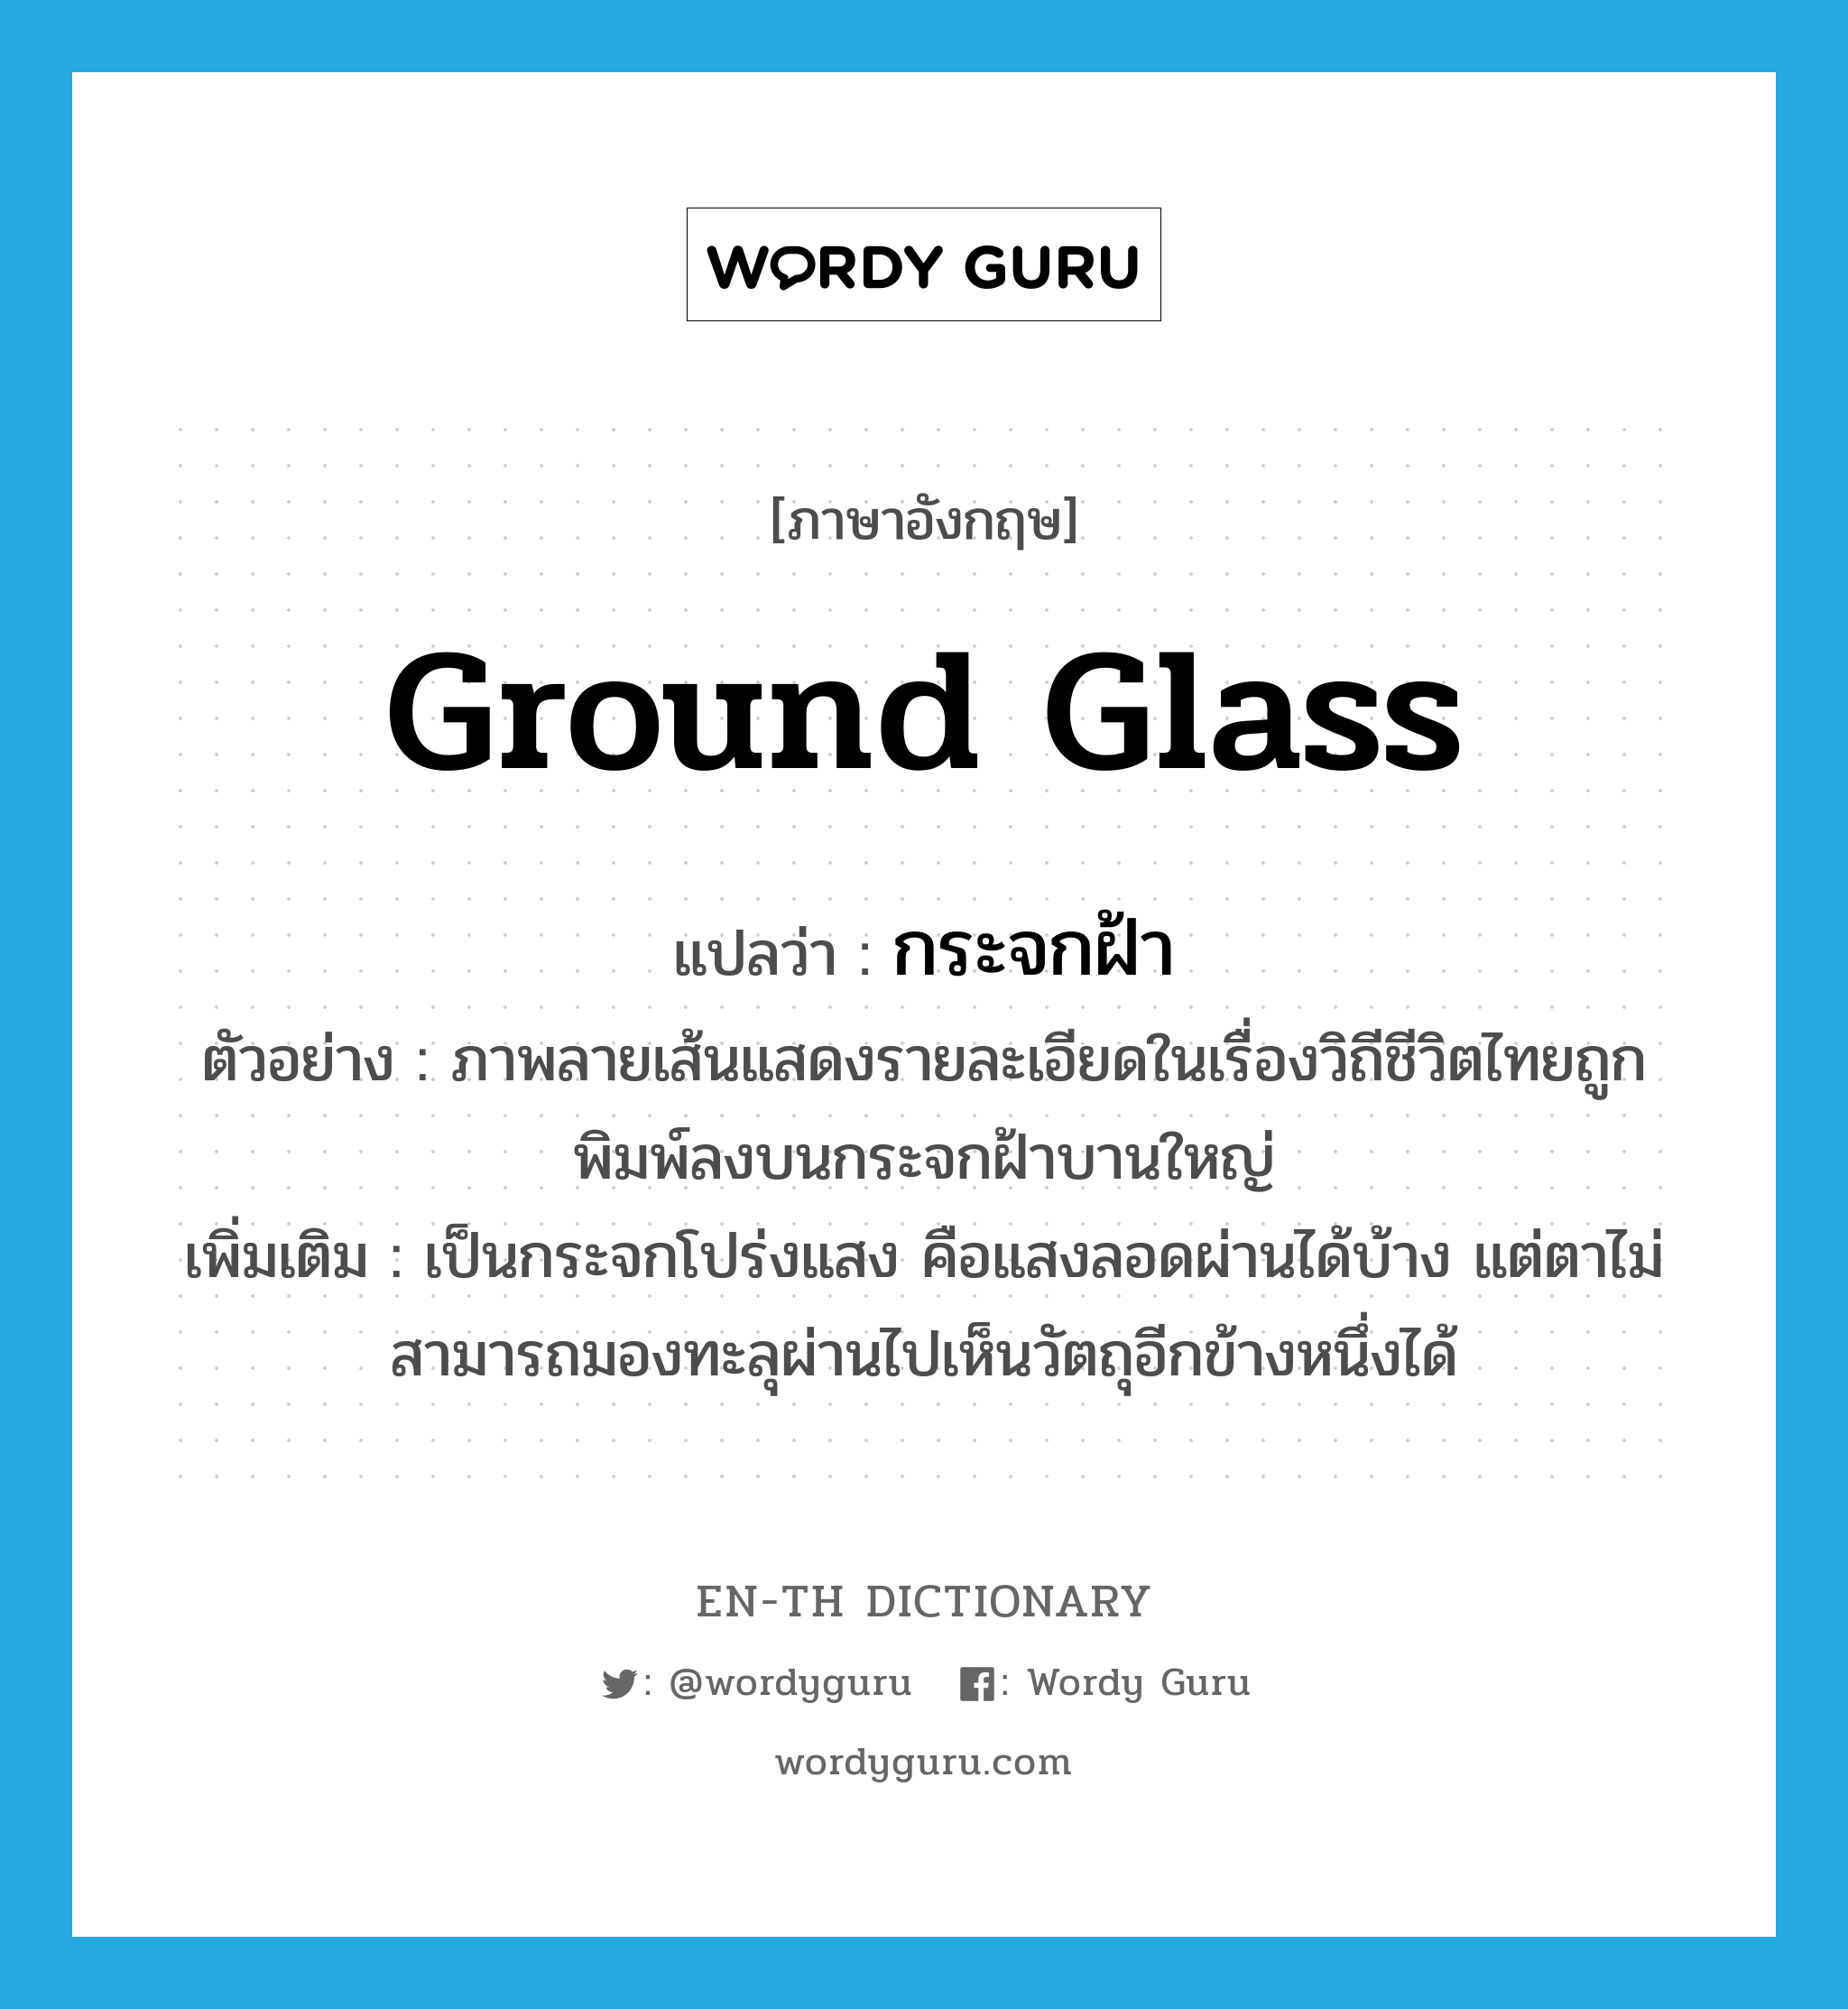 ground glass แปลว่า?, คำศัพท์ภาษาอังกฤษ ground glass แปลว่า กระจกฝ้า ประเภท N ตัวอย่าง ภาพลายเส้นแสดงรายละเอียดในเรื่องวิถีชีวิตไทยถูกพิมพ์ลงบนกระจกฝ้าบานใหญ่ เพิ่มเติม เป็นกระจกโปร่งแสง คือแสงลอดผ่านได้บ้าง แต่ตาไม่สามารถมองทะลุผ่านไปเห็นวัตถุอีกข้างหนึ่งได้ หมวด N